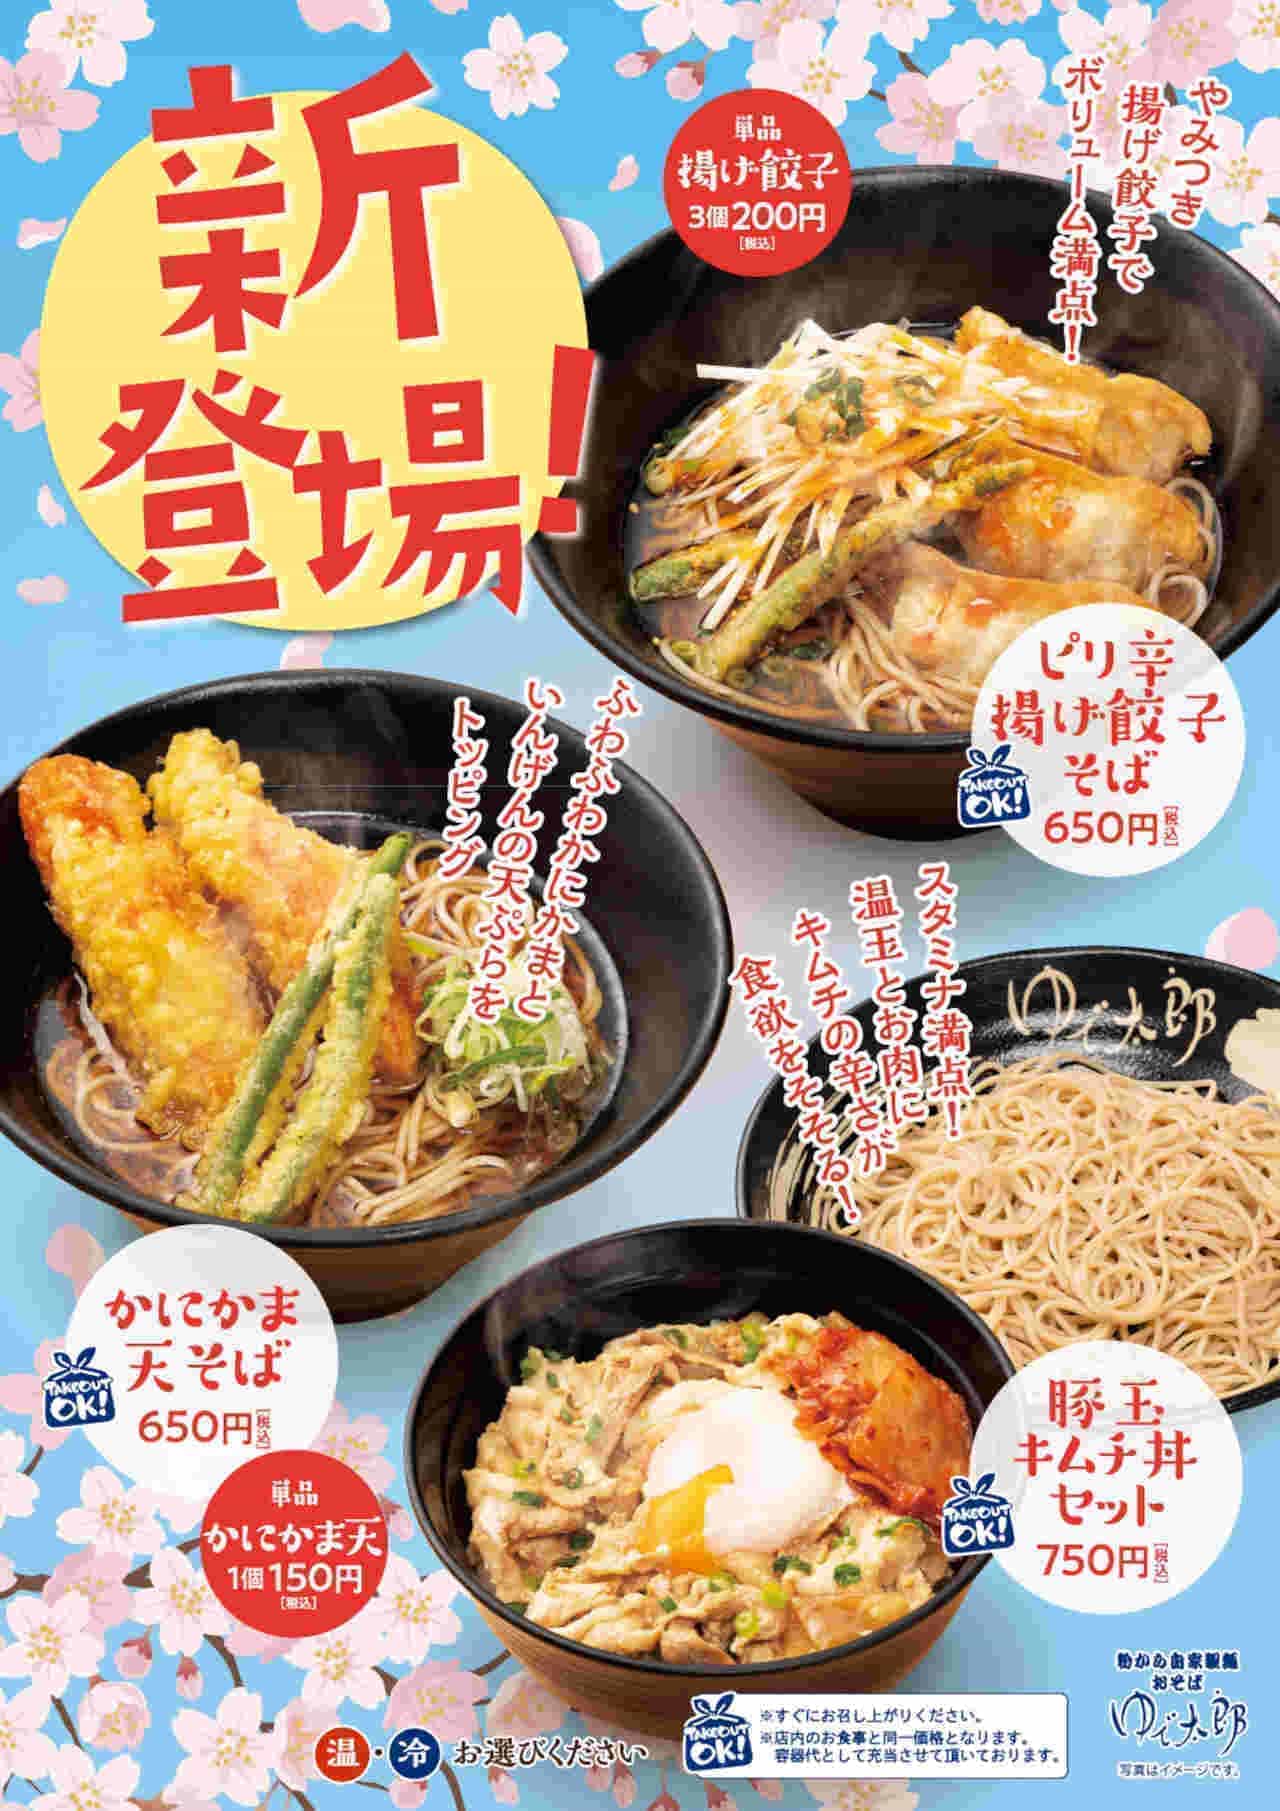 YUDETARO "spicy fried gyoza soba", "kanikamaten soba", "pork and egg kimchi rice bowl set